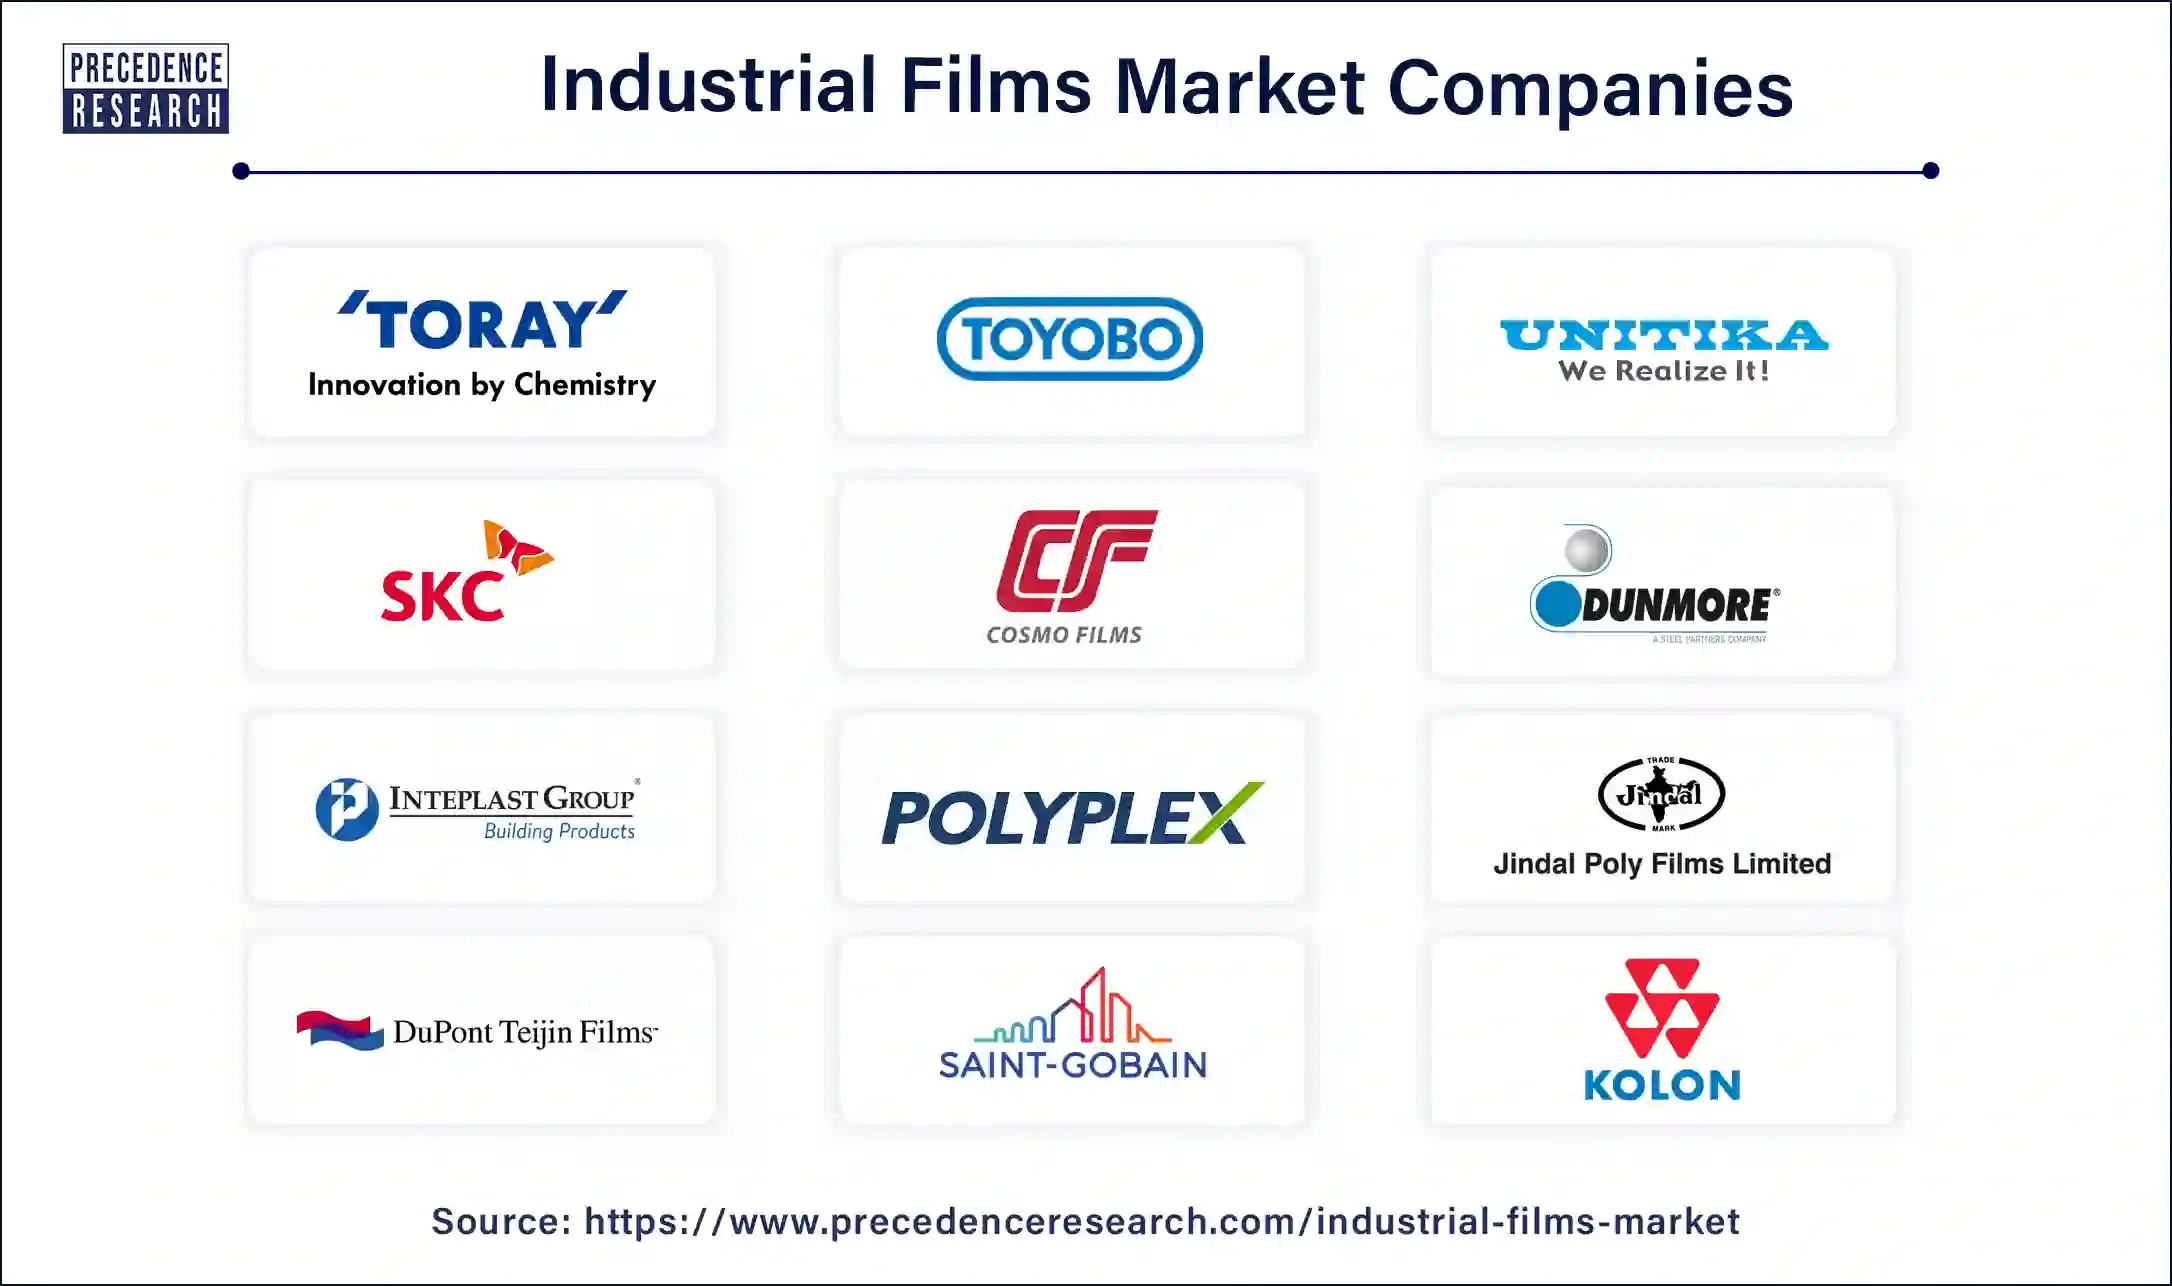 Industrial Film Companies